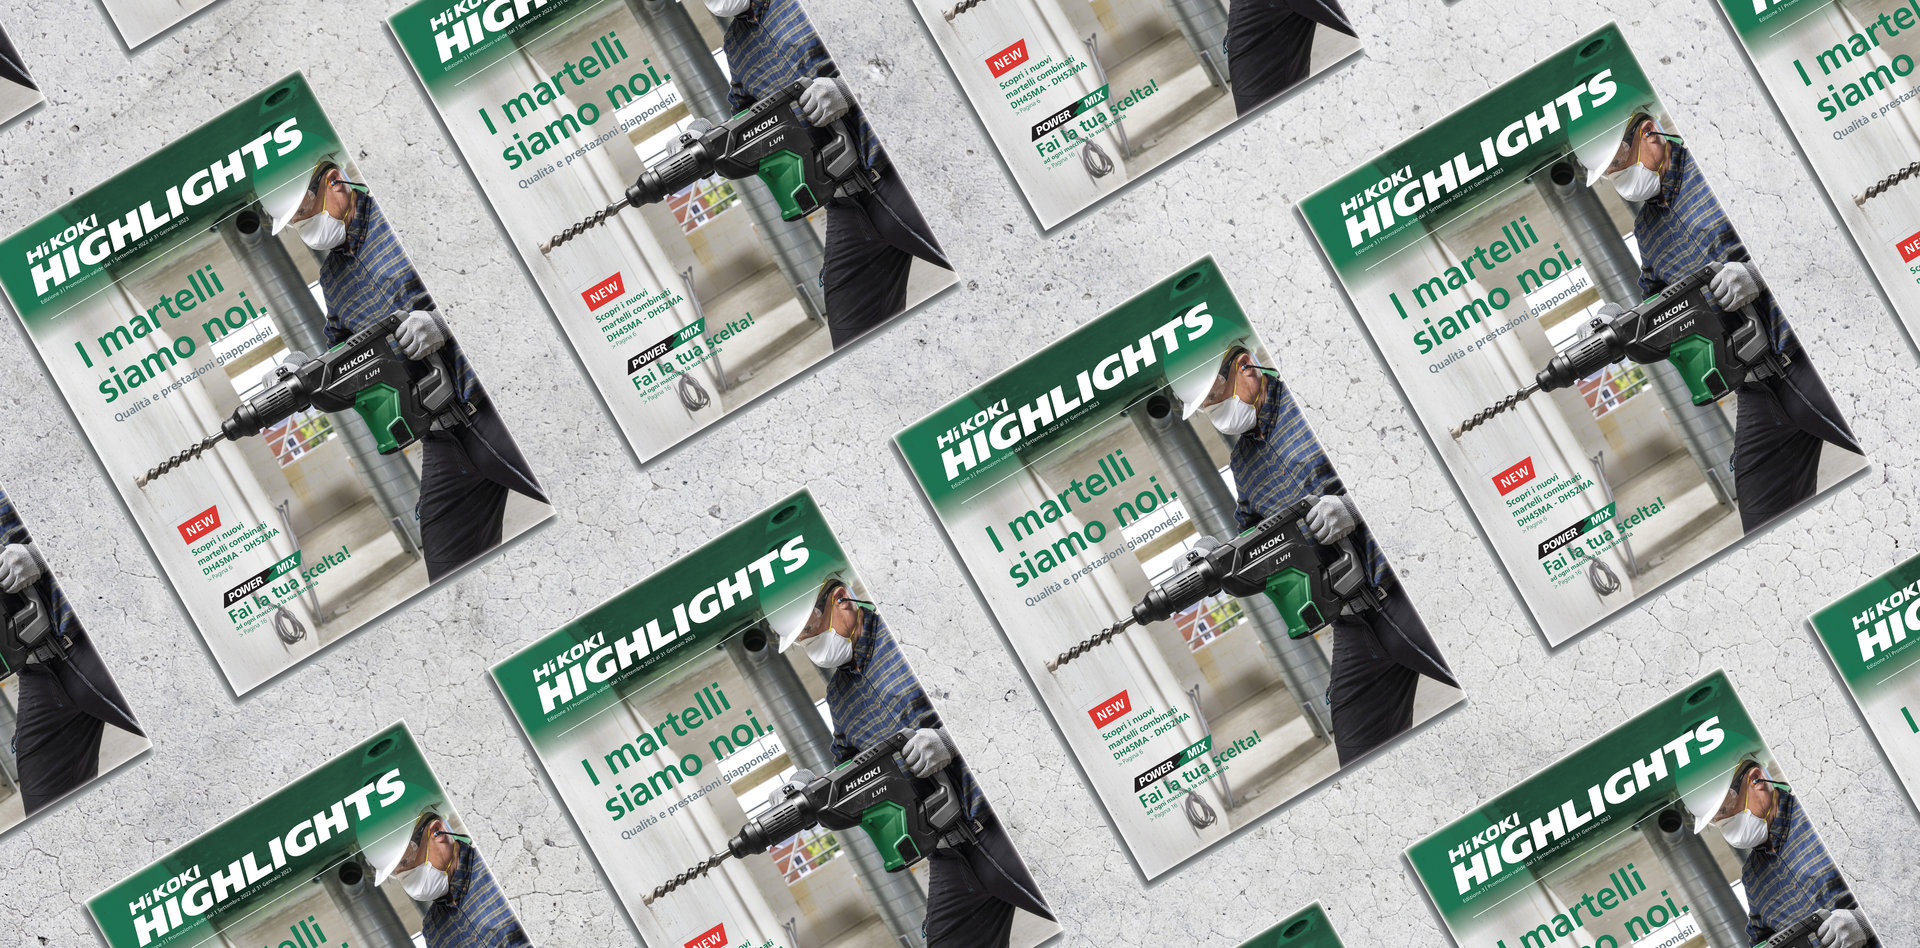 HiKOKI Magazine - HIGHLIGHTS